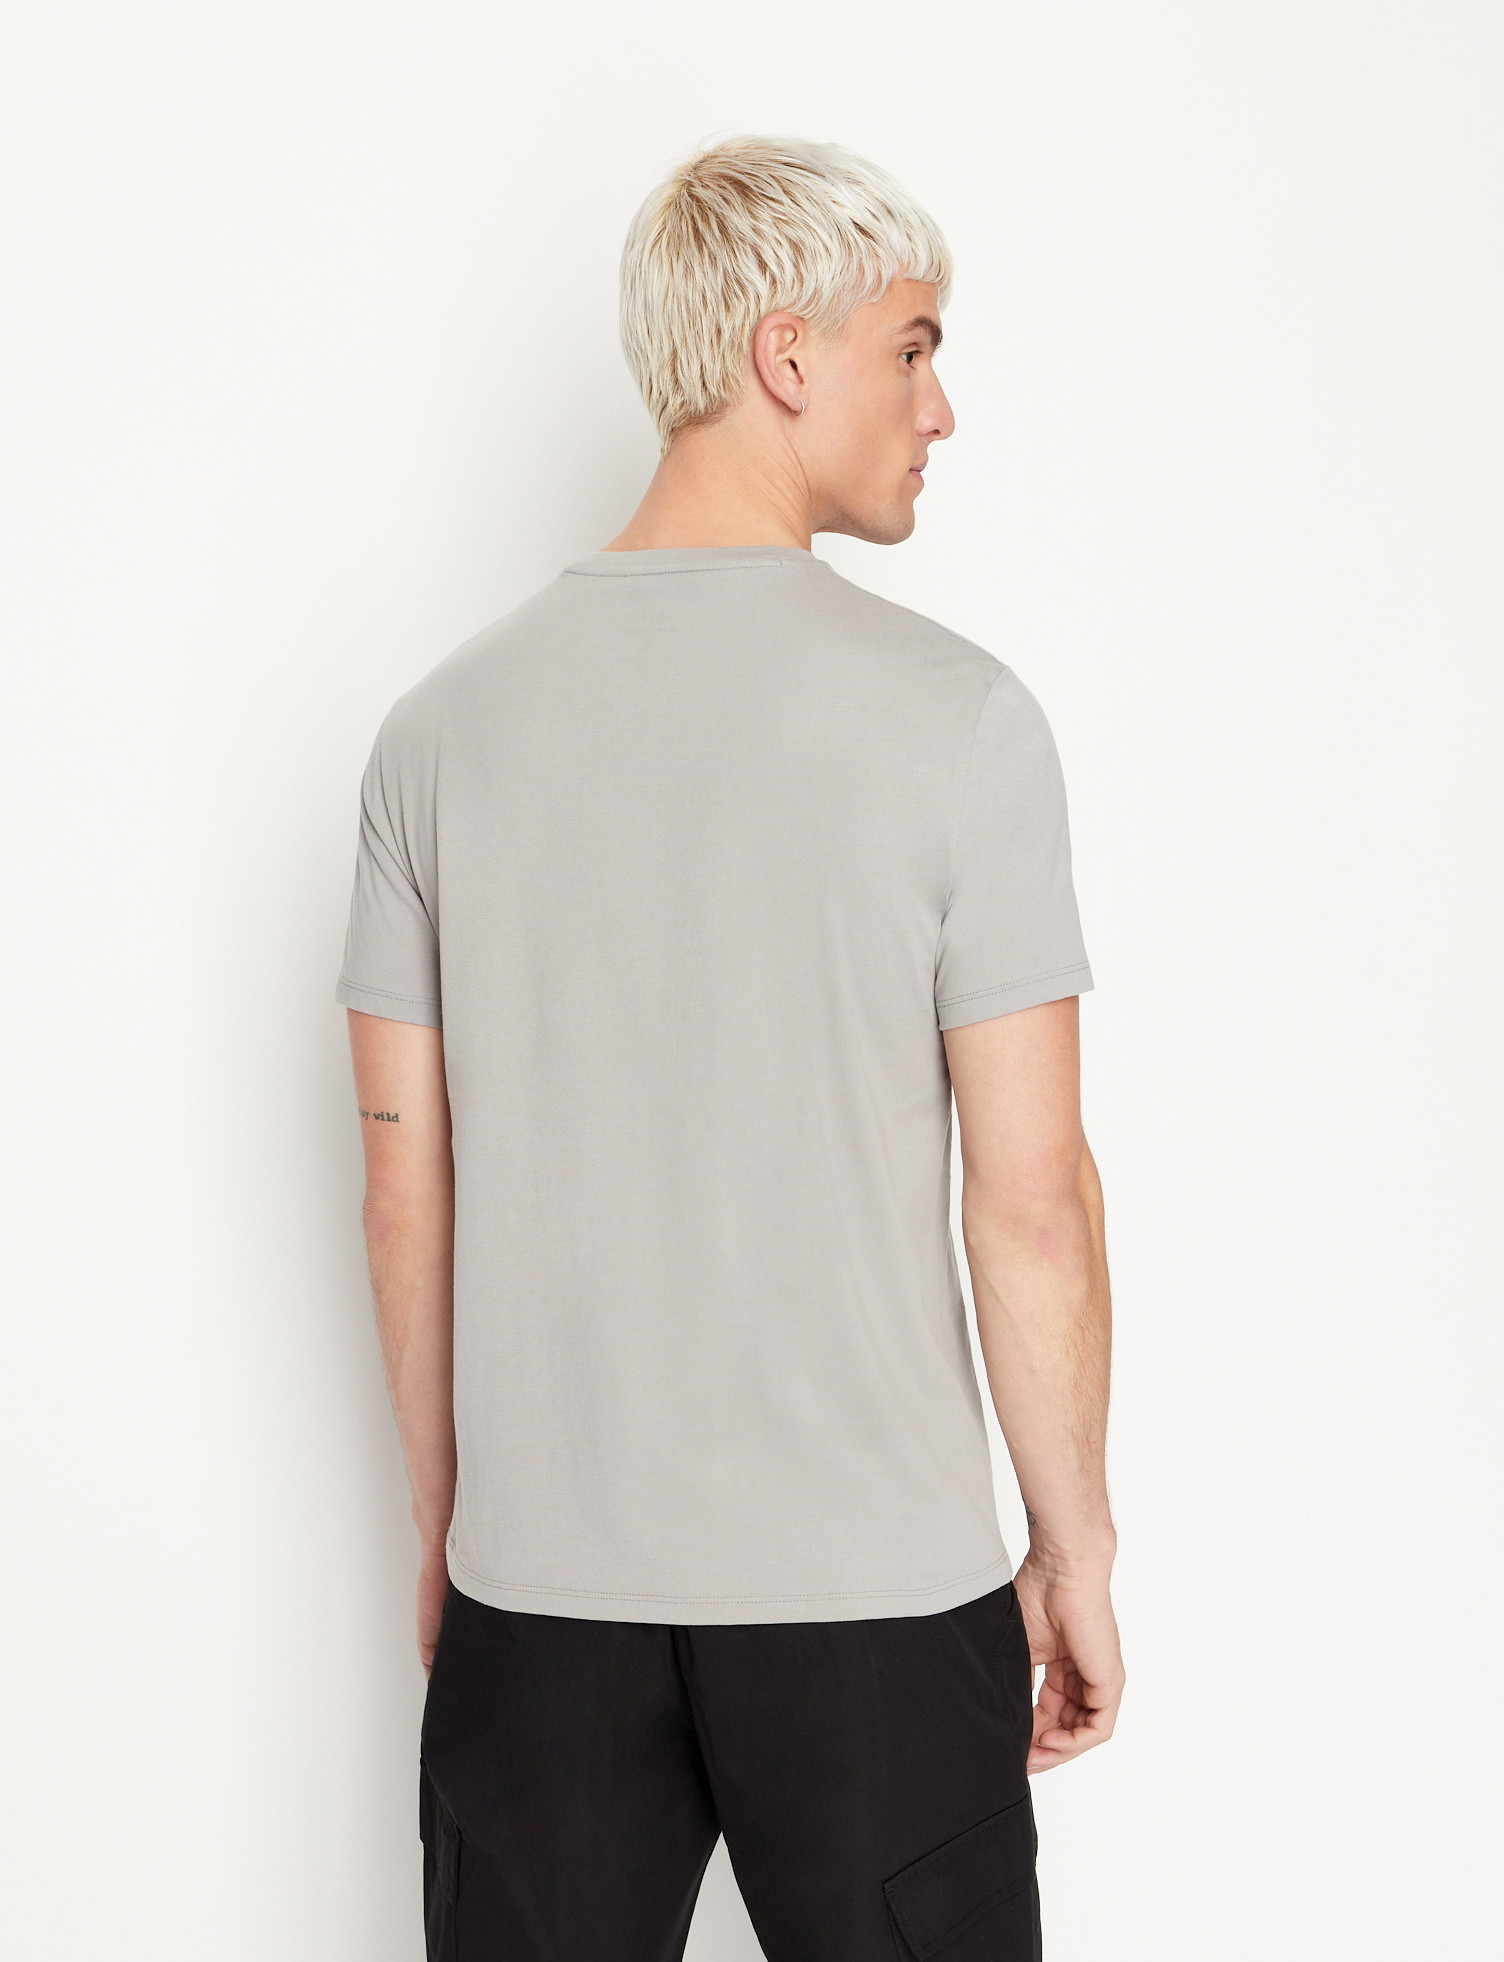 Armani Exchange - T-shirt con stampa grafica regular fit, Grigio scuro, large image number 2